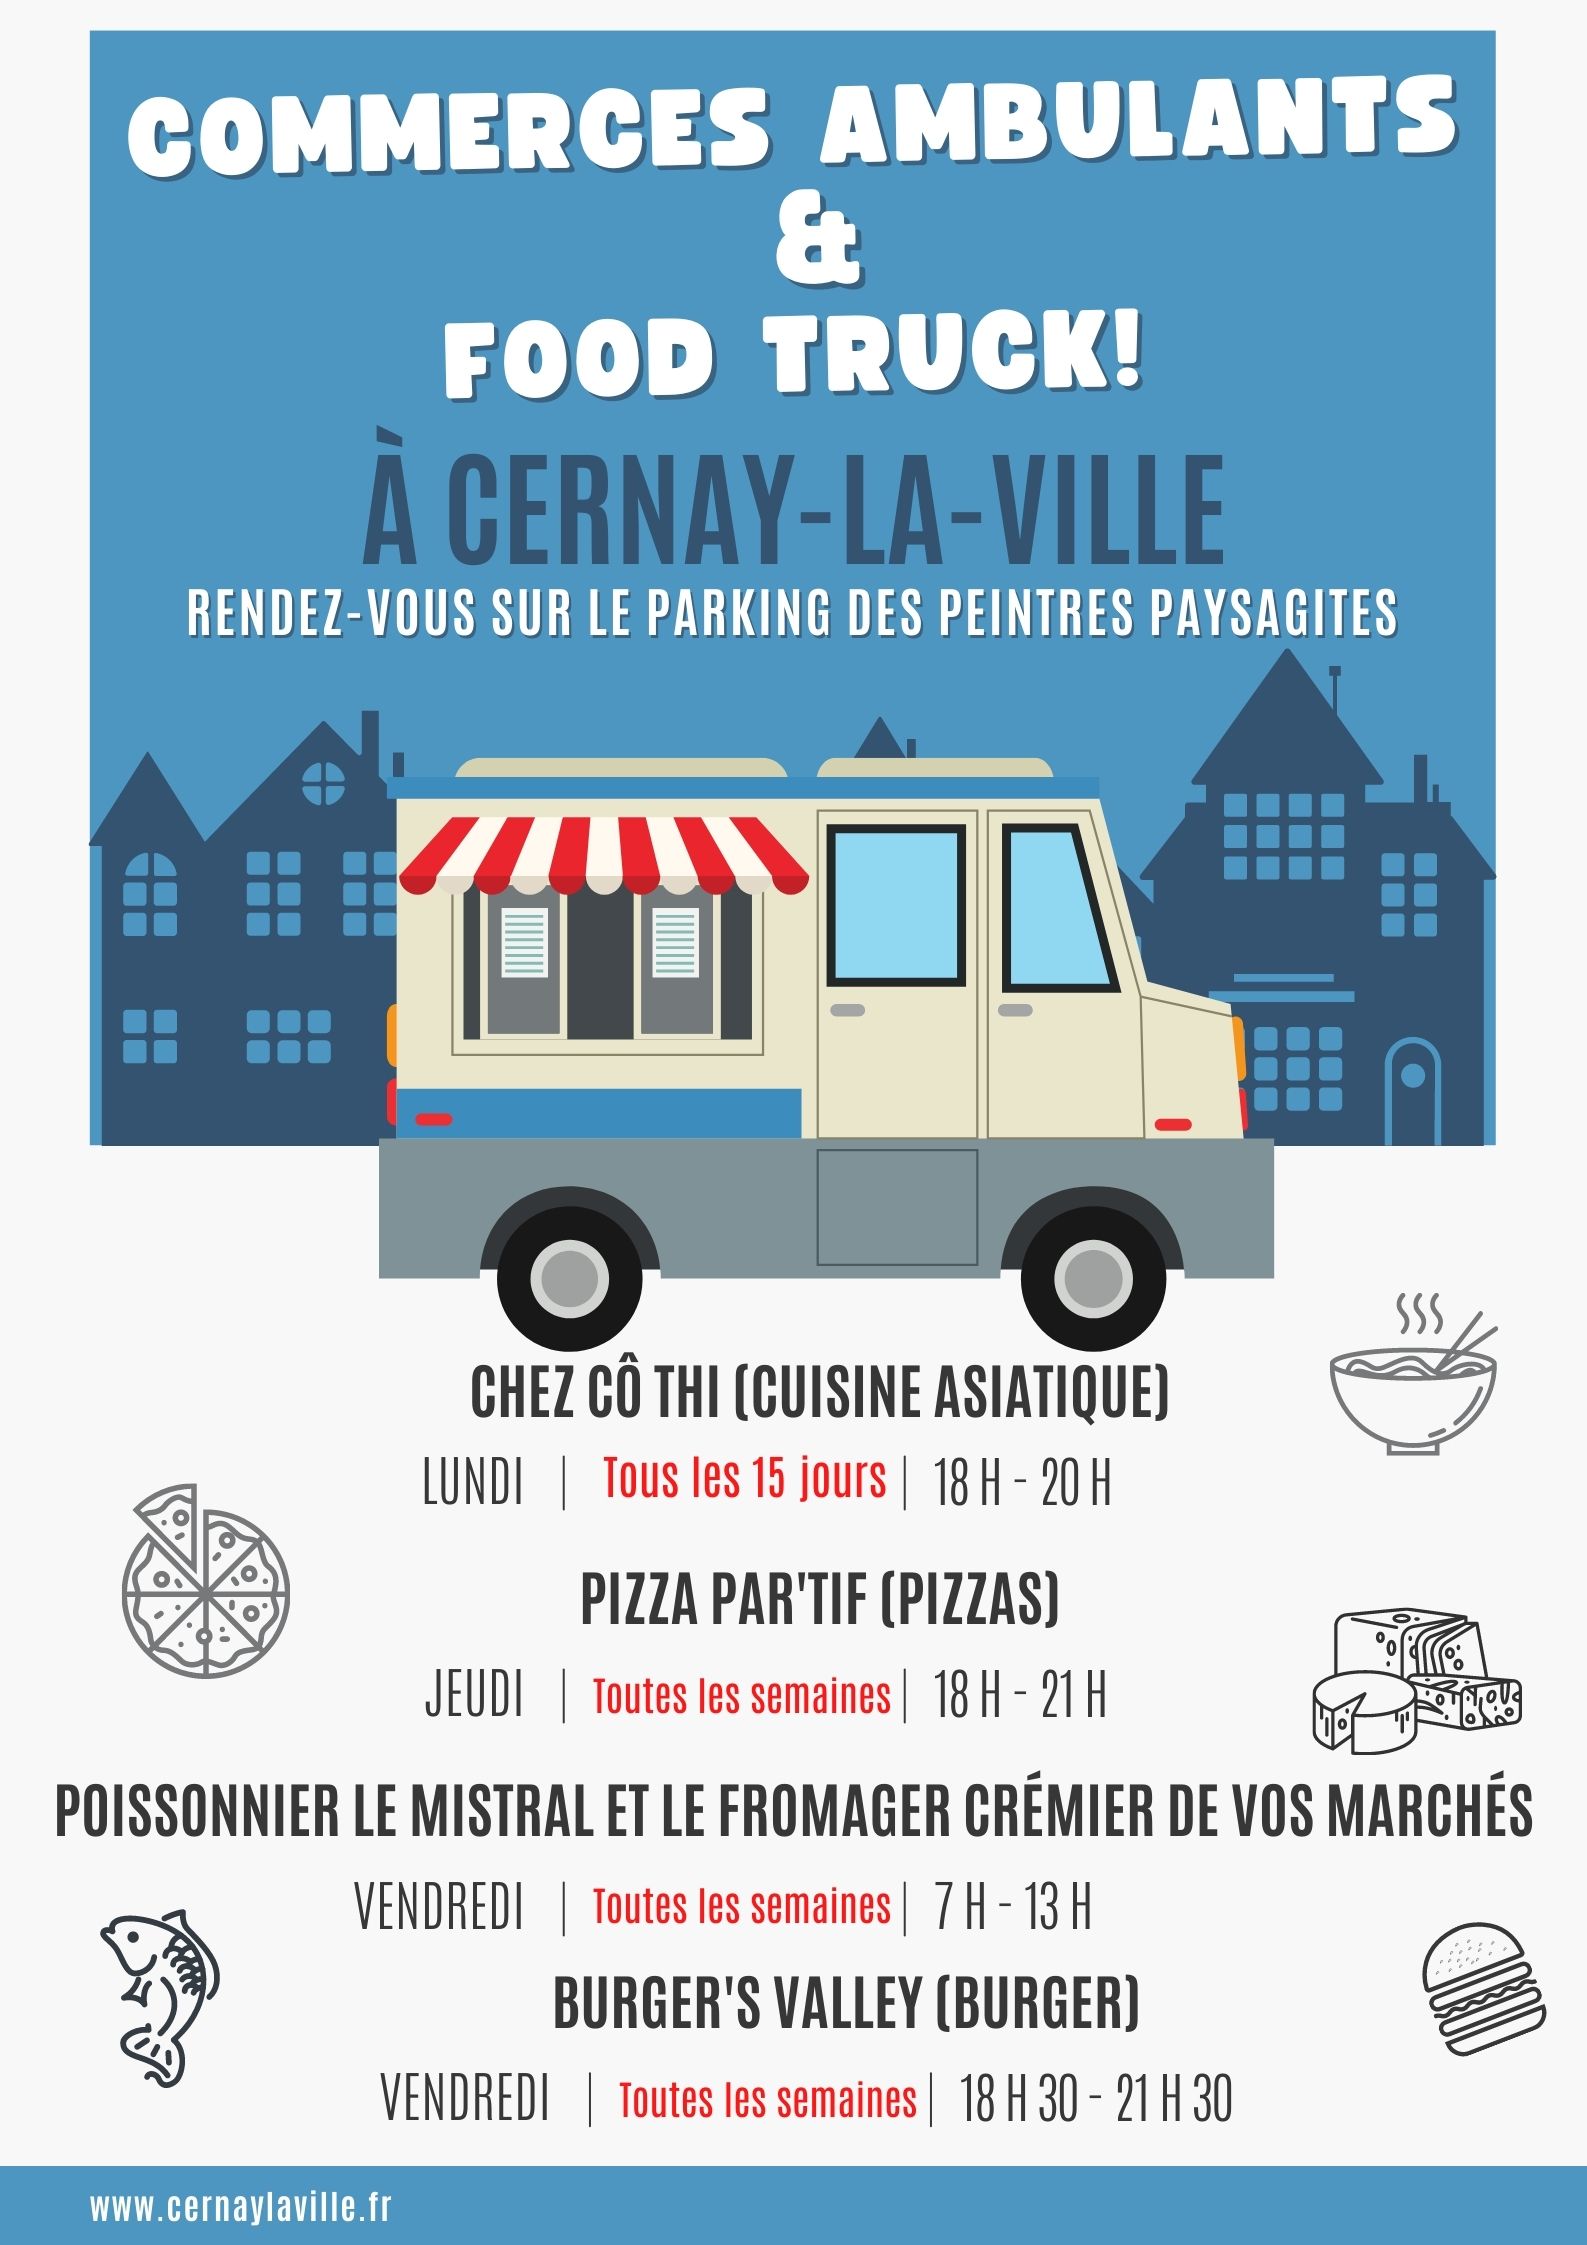 Commerces Food truck Cernay la Ville